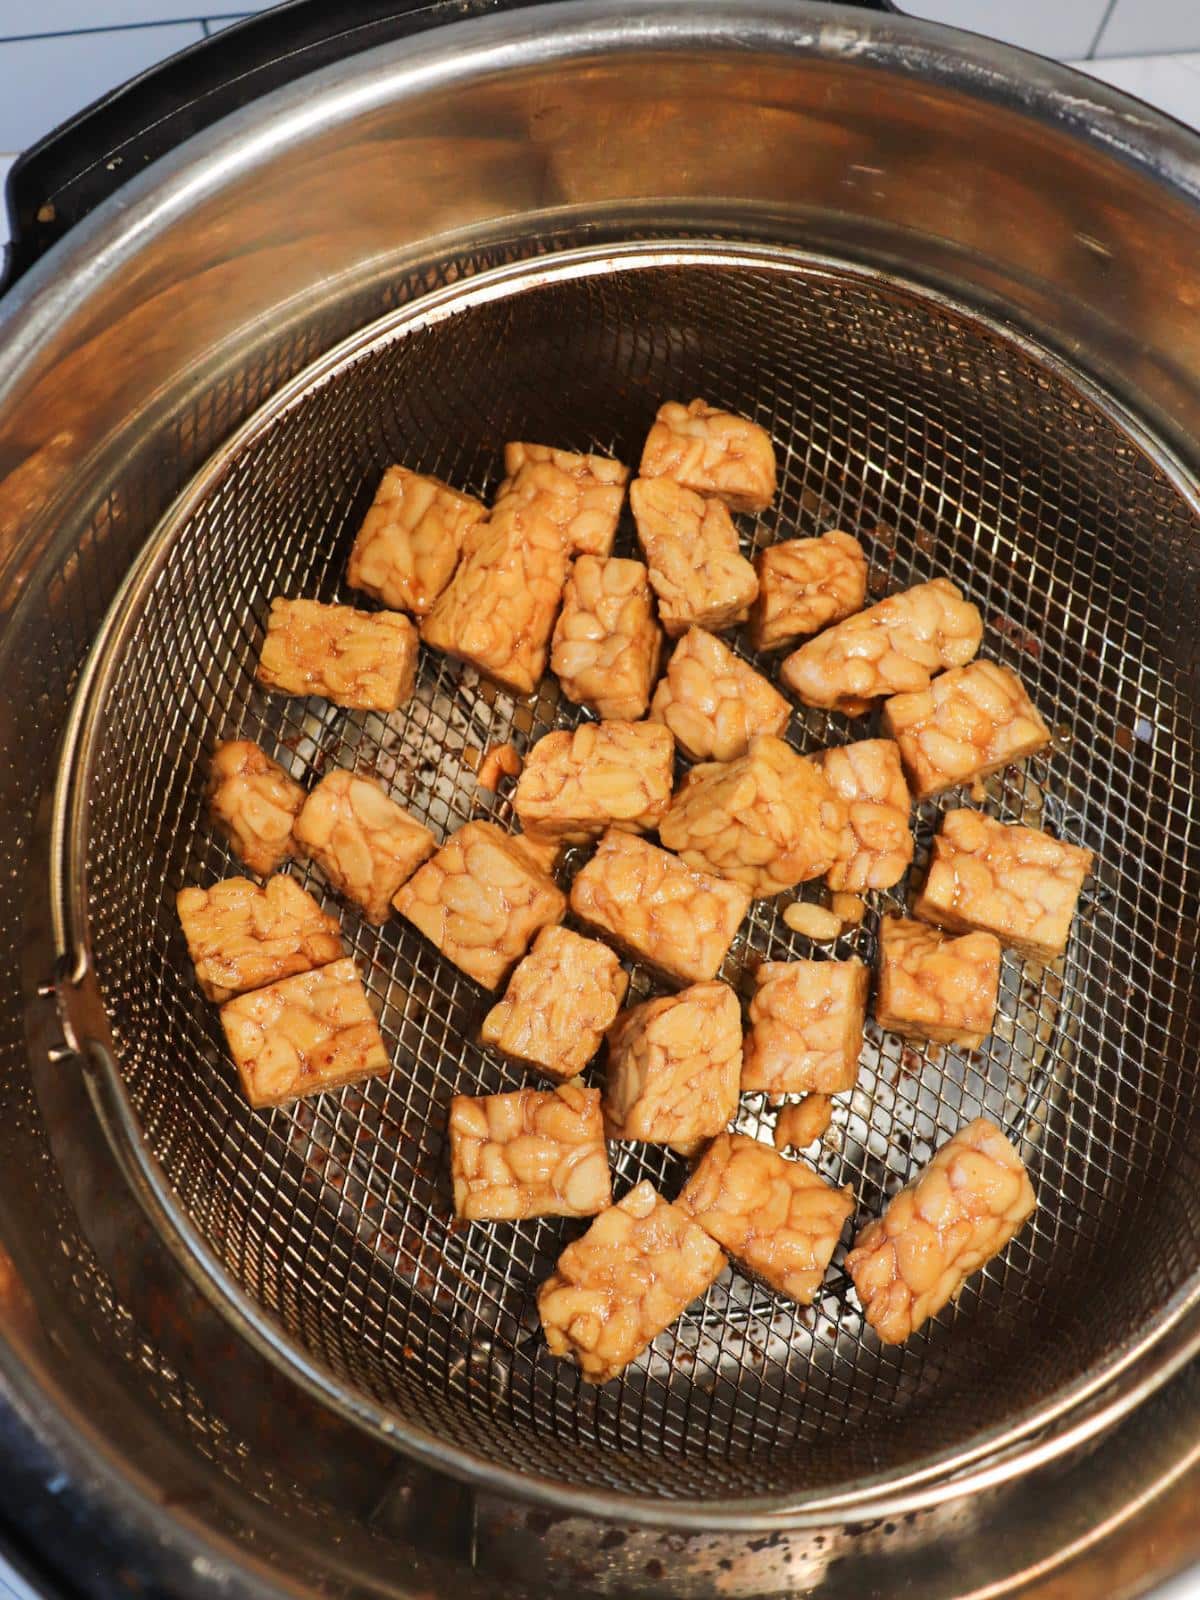 Marinated tempeh cubes in an air fryer before getting air fried.